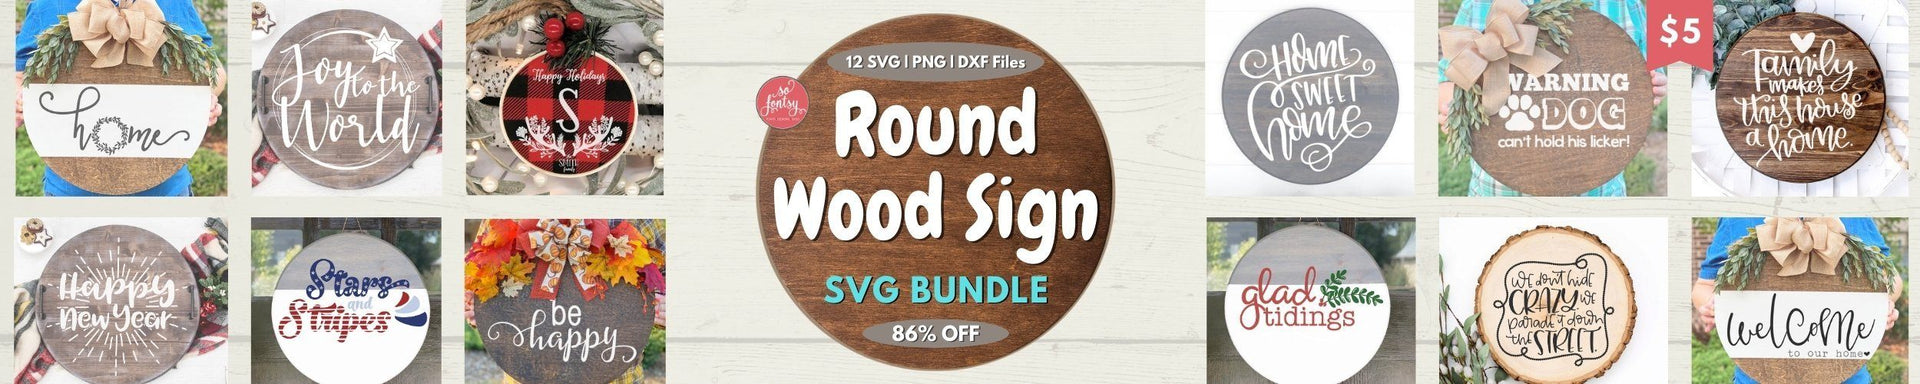 Street Sign SVG - Direction Board Cut File - So Fontsy